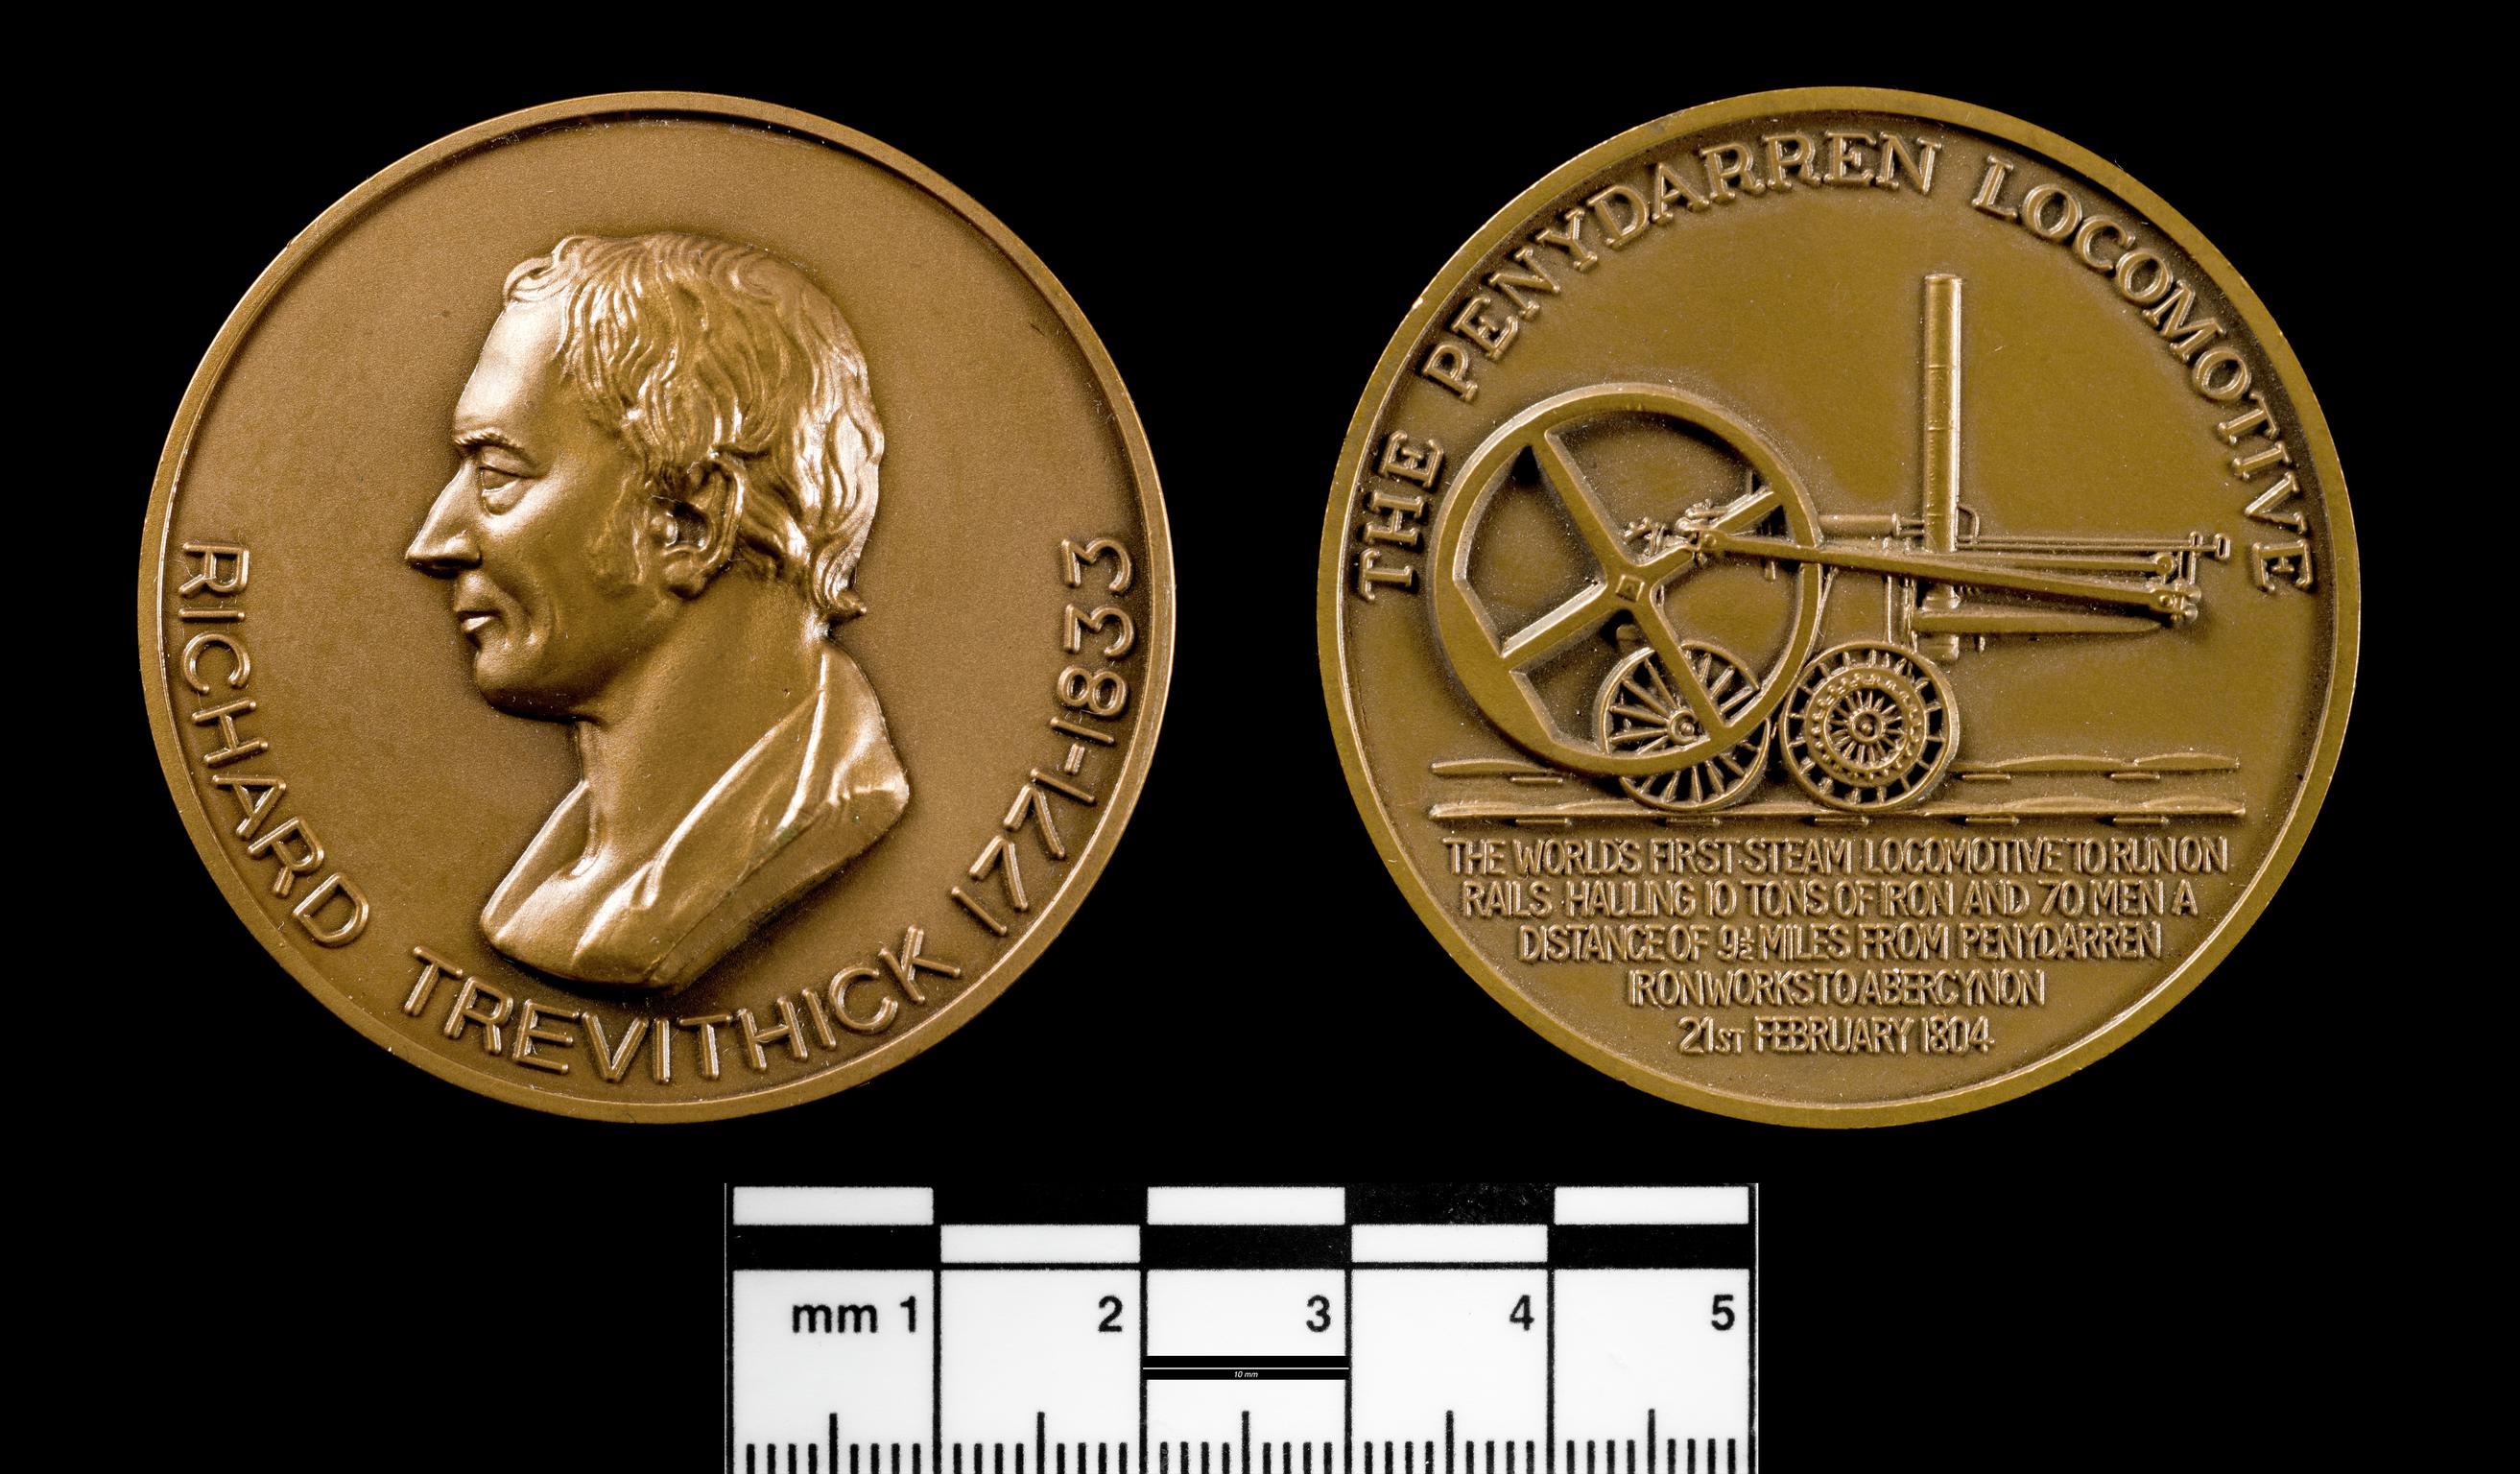 Trevithick commemorative medal